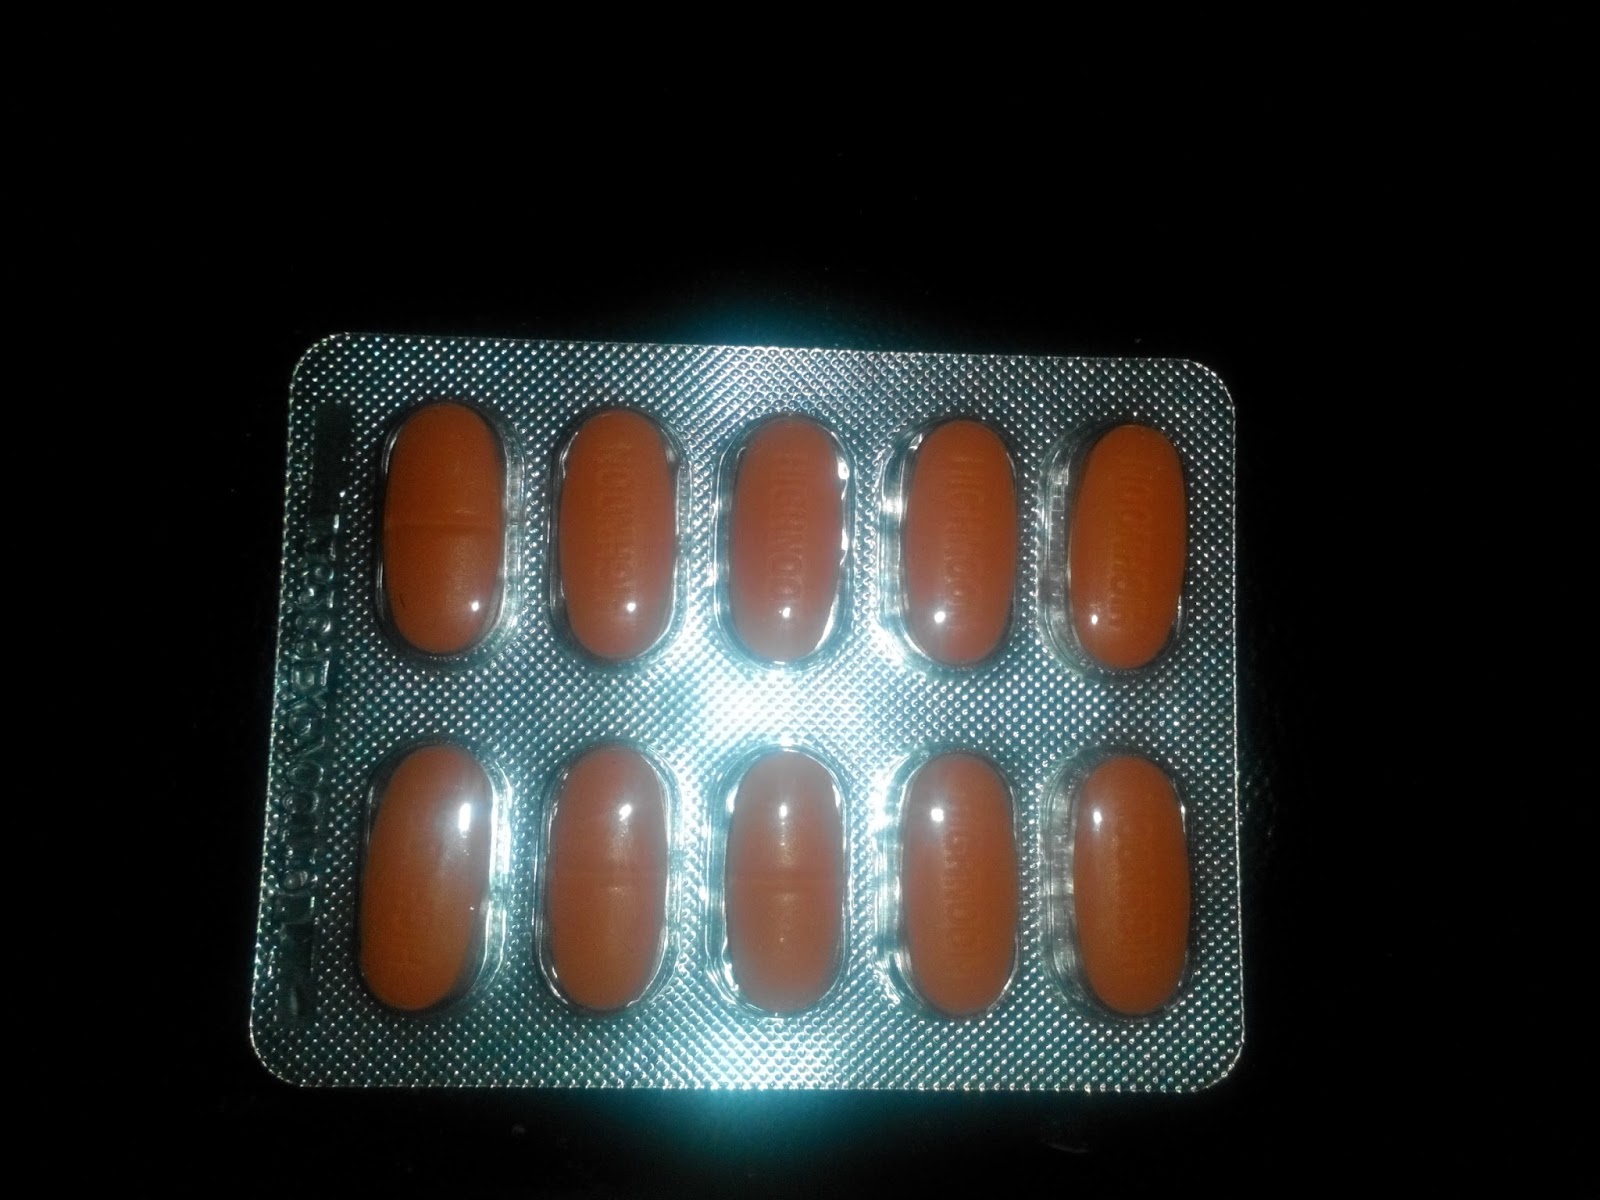 ciprofloxacin hcl 500 mg tablet side effects